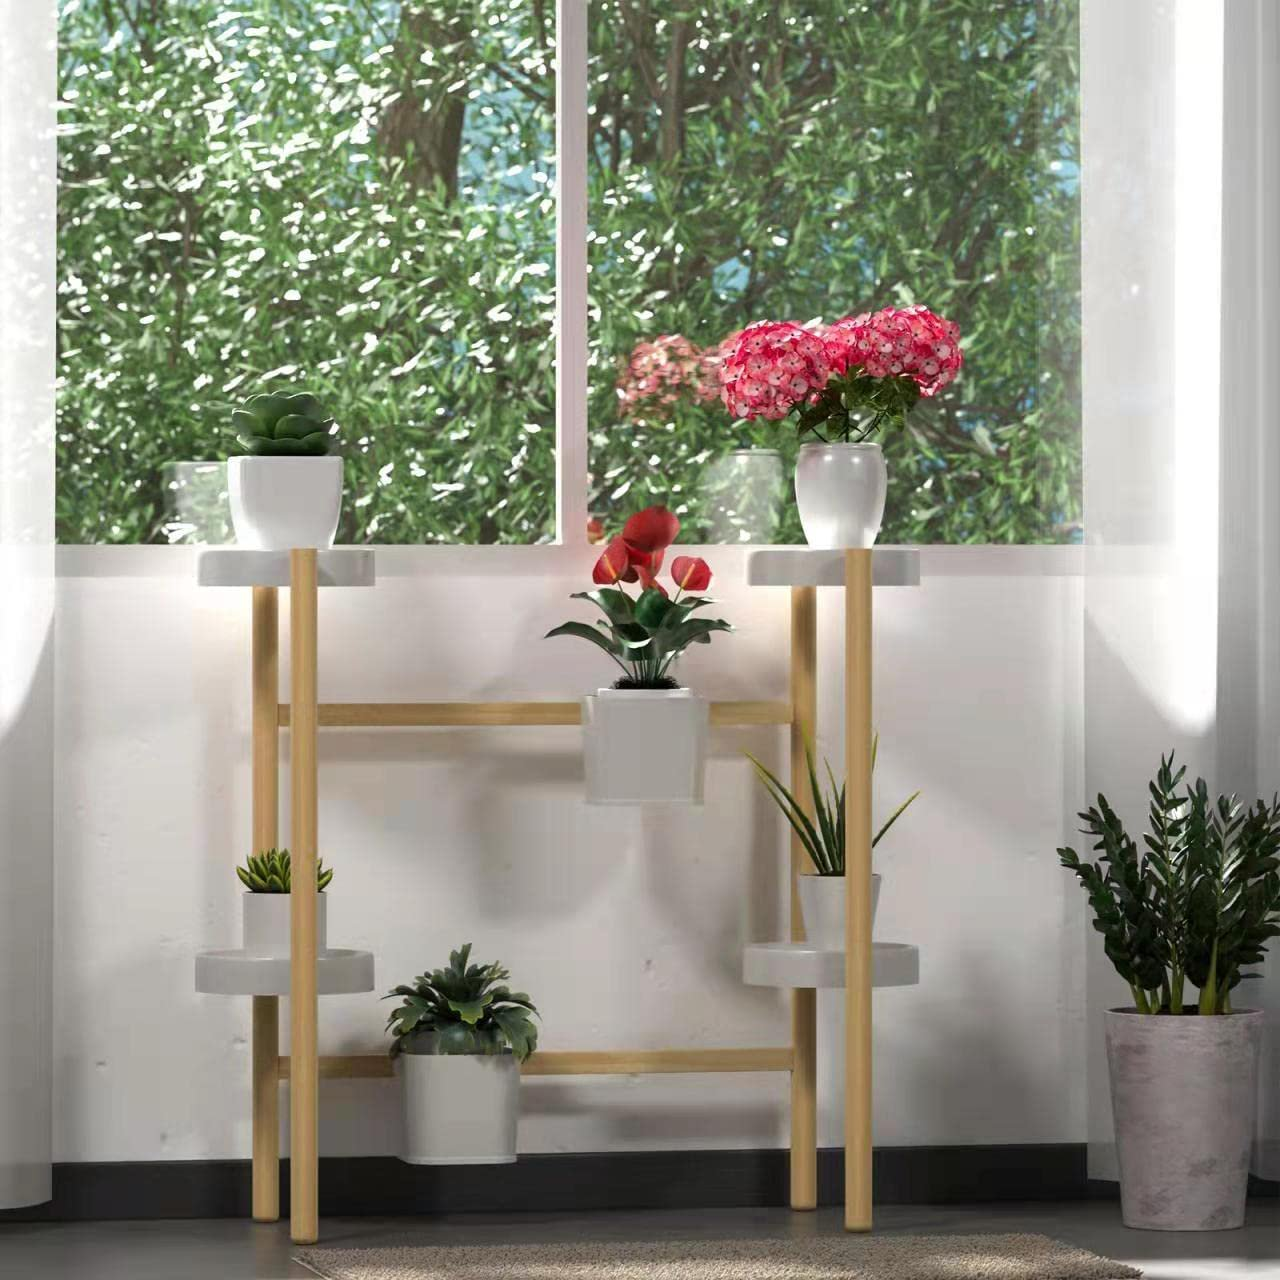 WTZ Bamboo Plant Stands Indoor, 6 Tier Tall Corner Plant Stand Holder & Plant Display Rack for Outdoor Garden Indoor Home